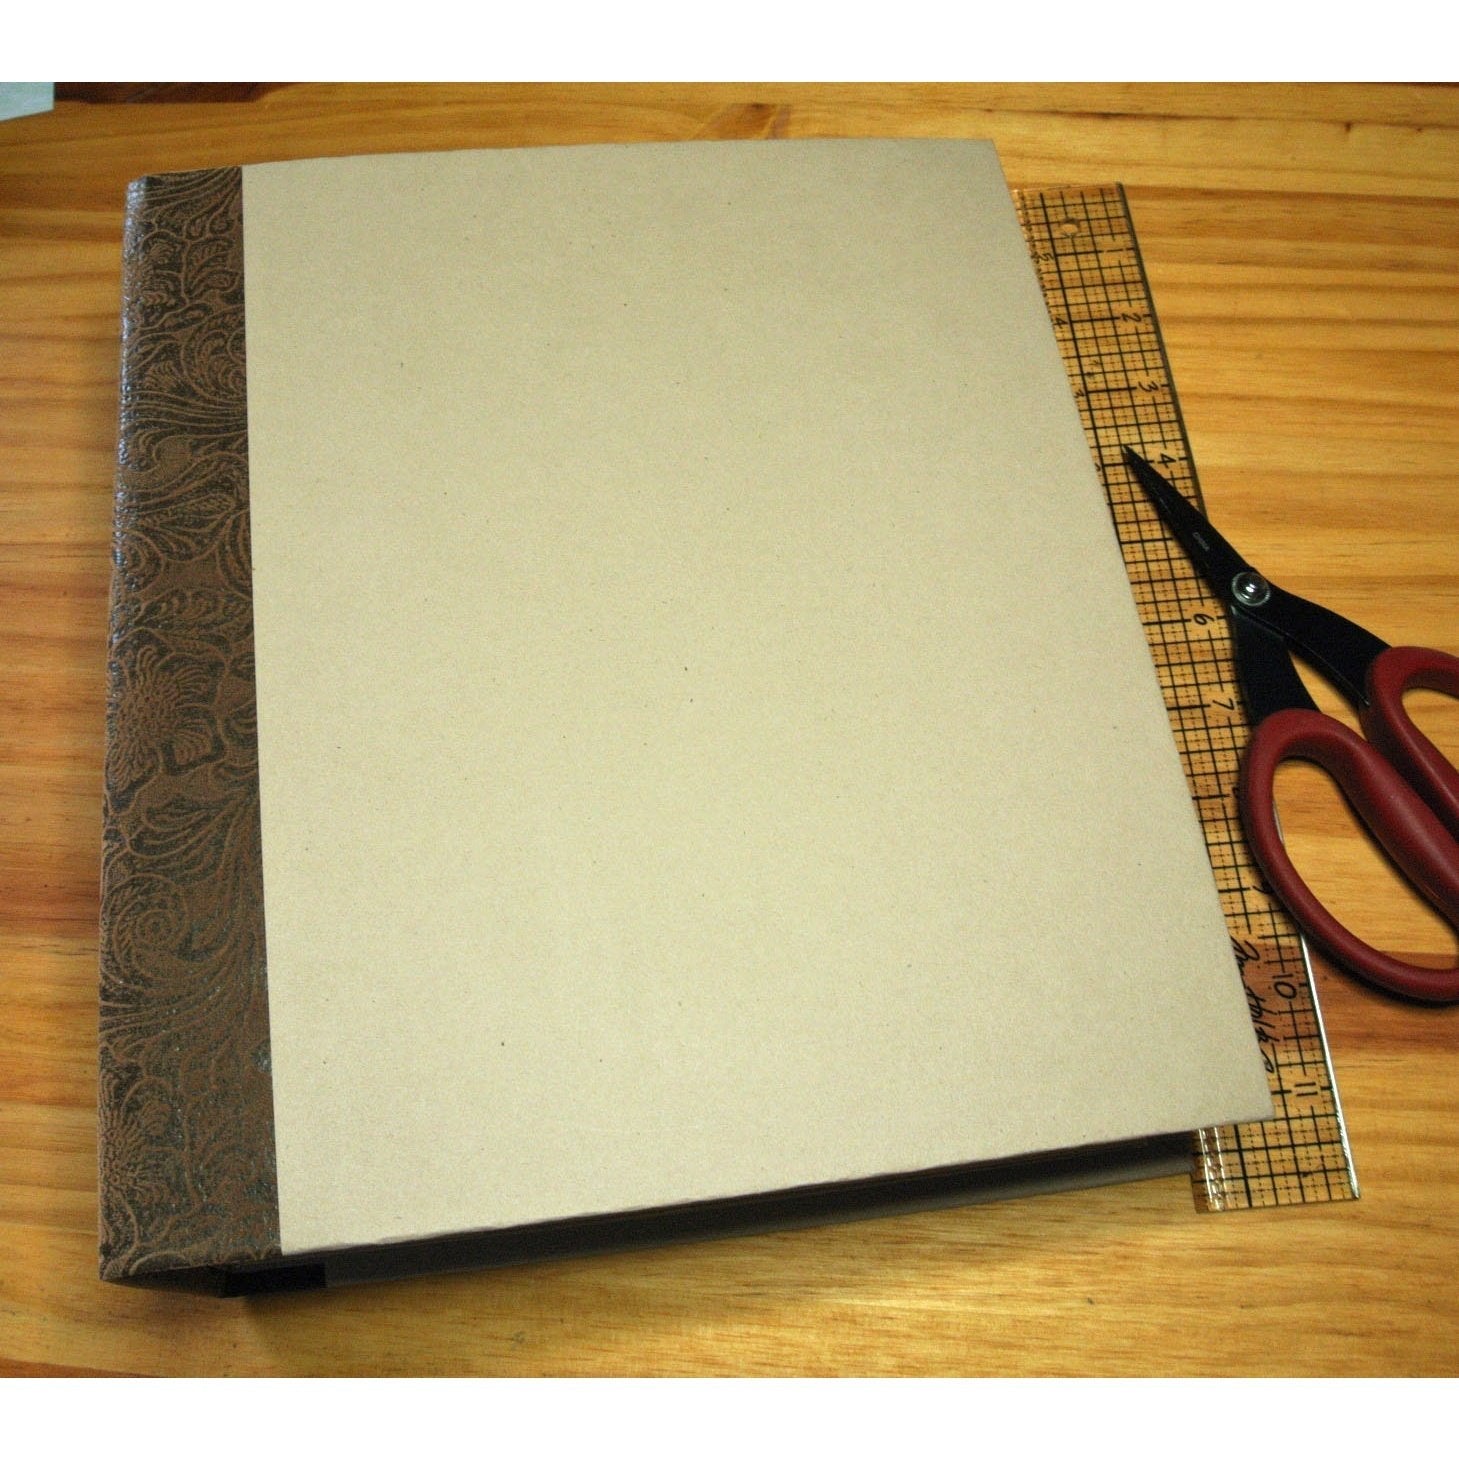 Blank Scrapbook Album, Handmade - Large Album with Storage Case to doc –  The Scrapologist™